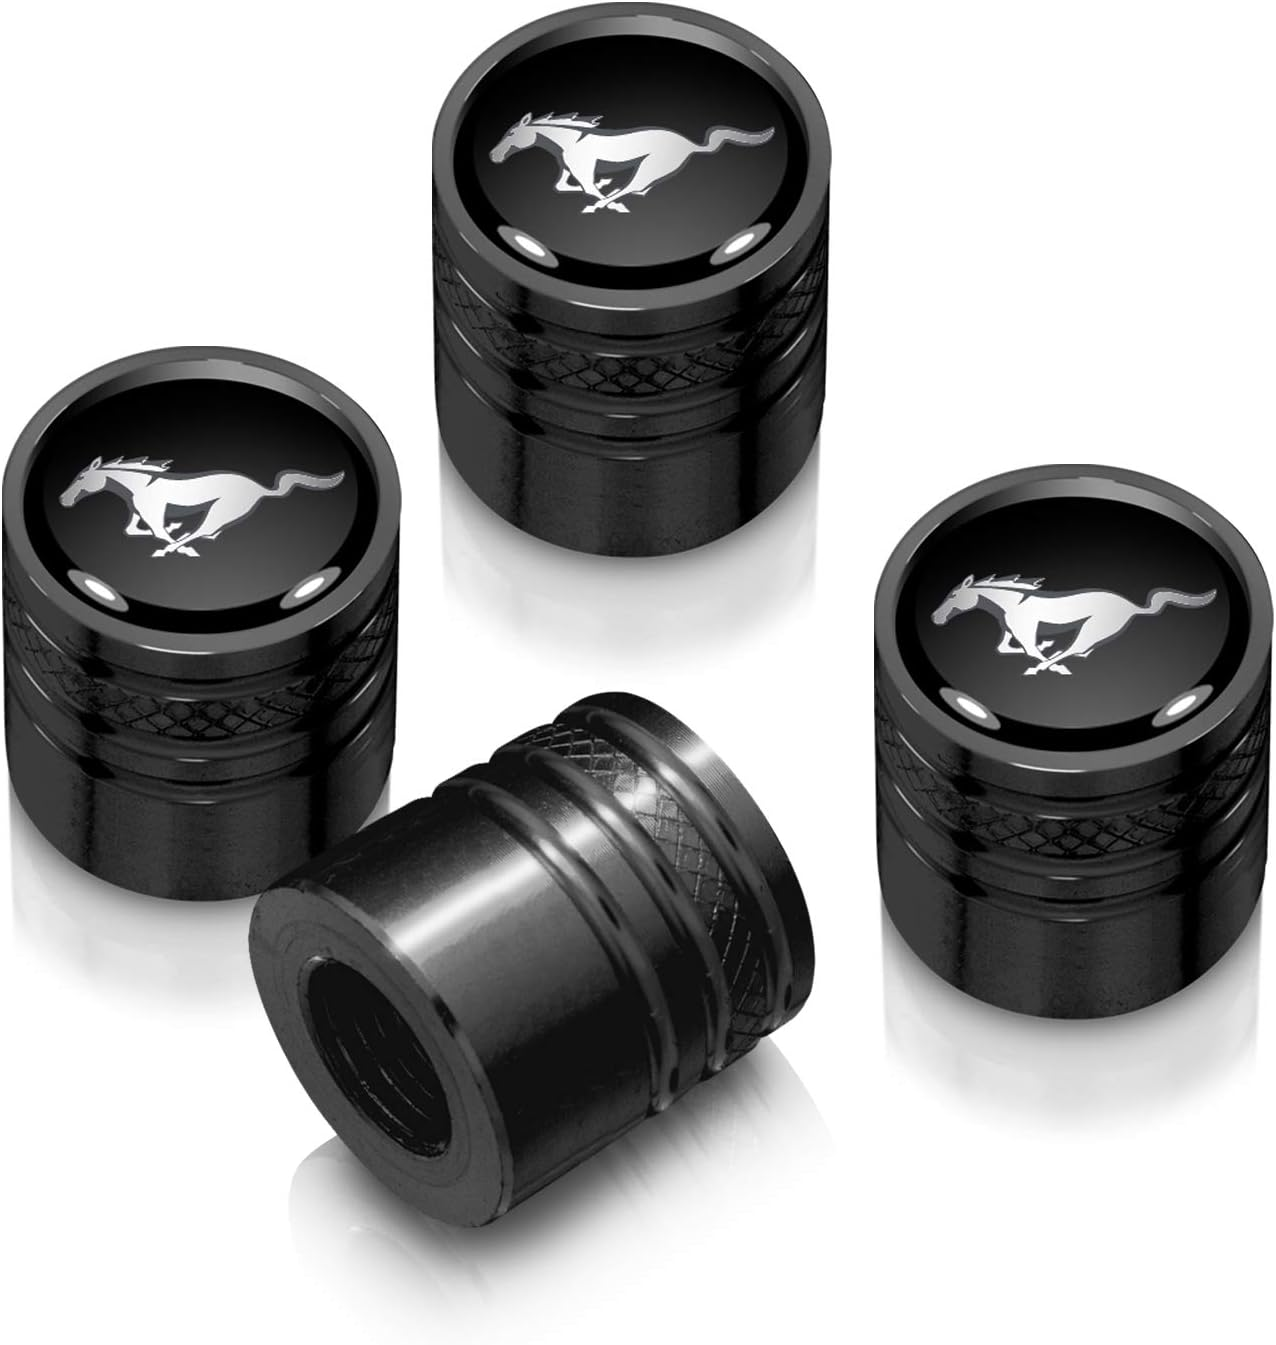 Ford Mustang Ventilkappen-Set schwarz mit Running Horse